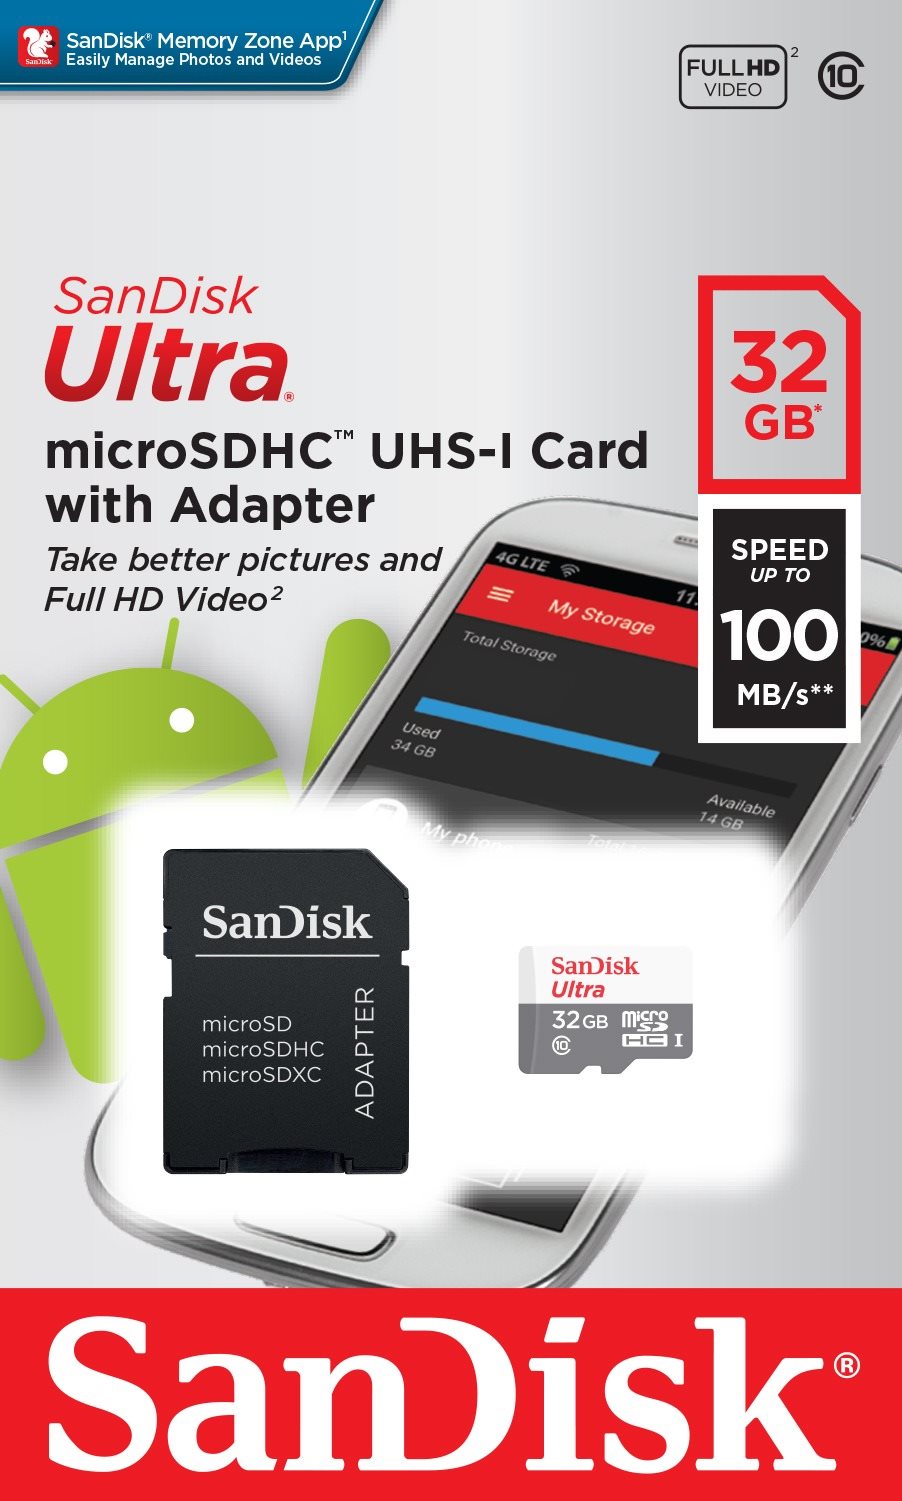 Memóriakártya SanDisk microSDHC 32GB Ultra Lite + SD adapter